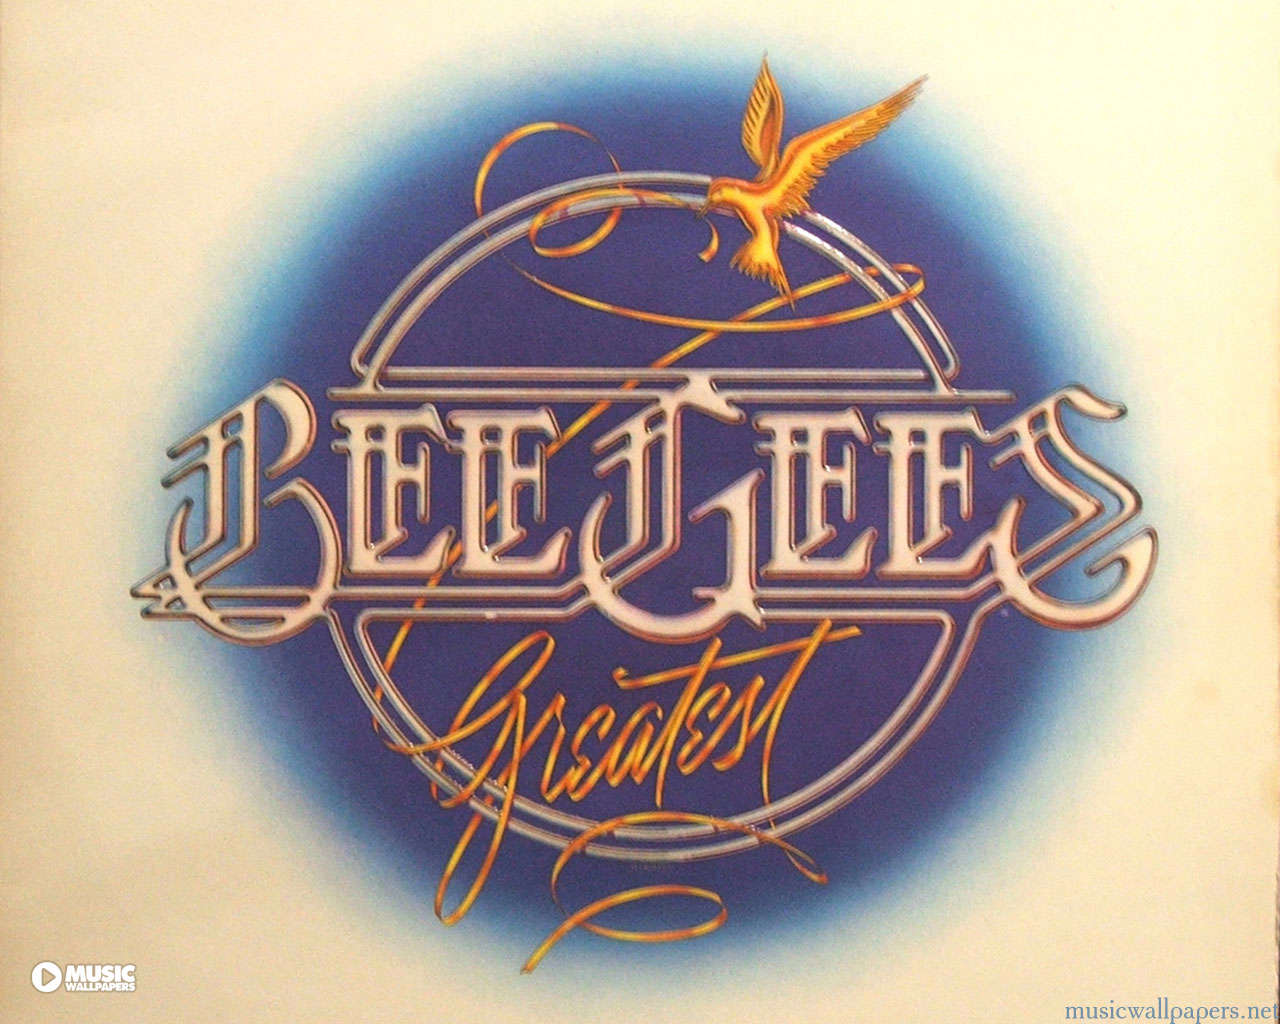 Bee Gees Wallpaper Music